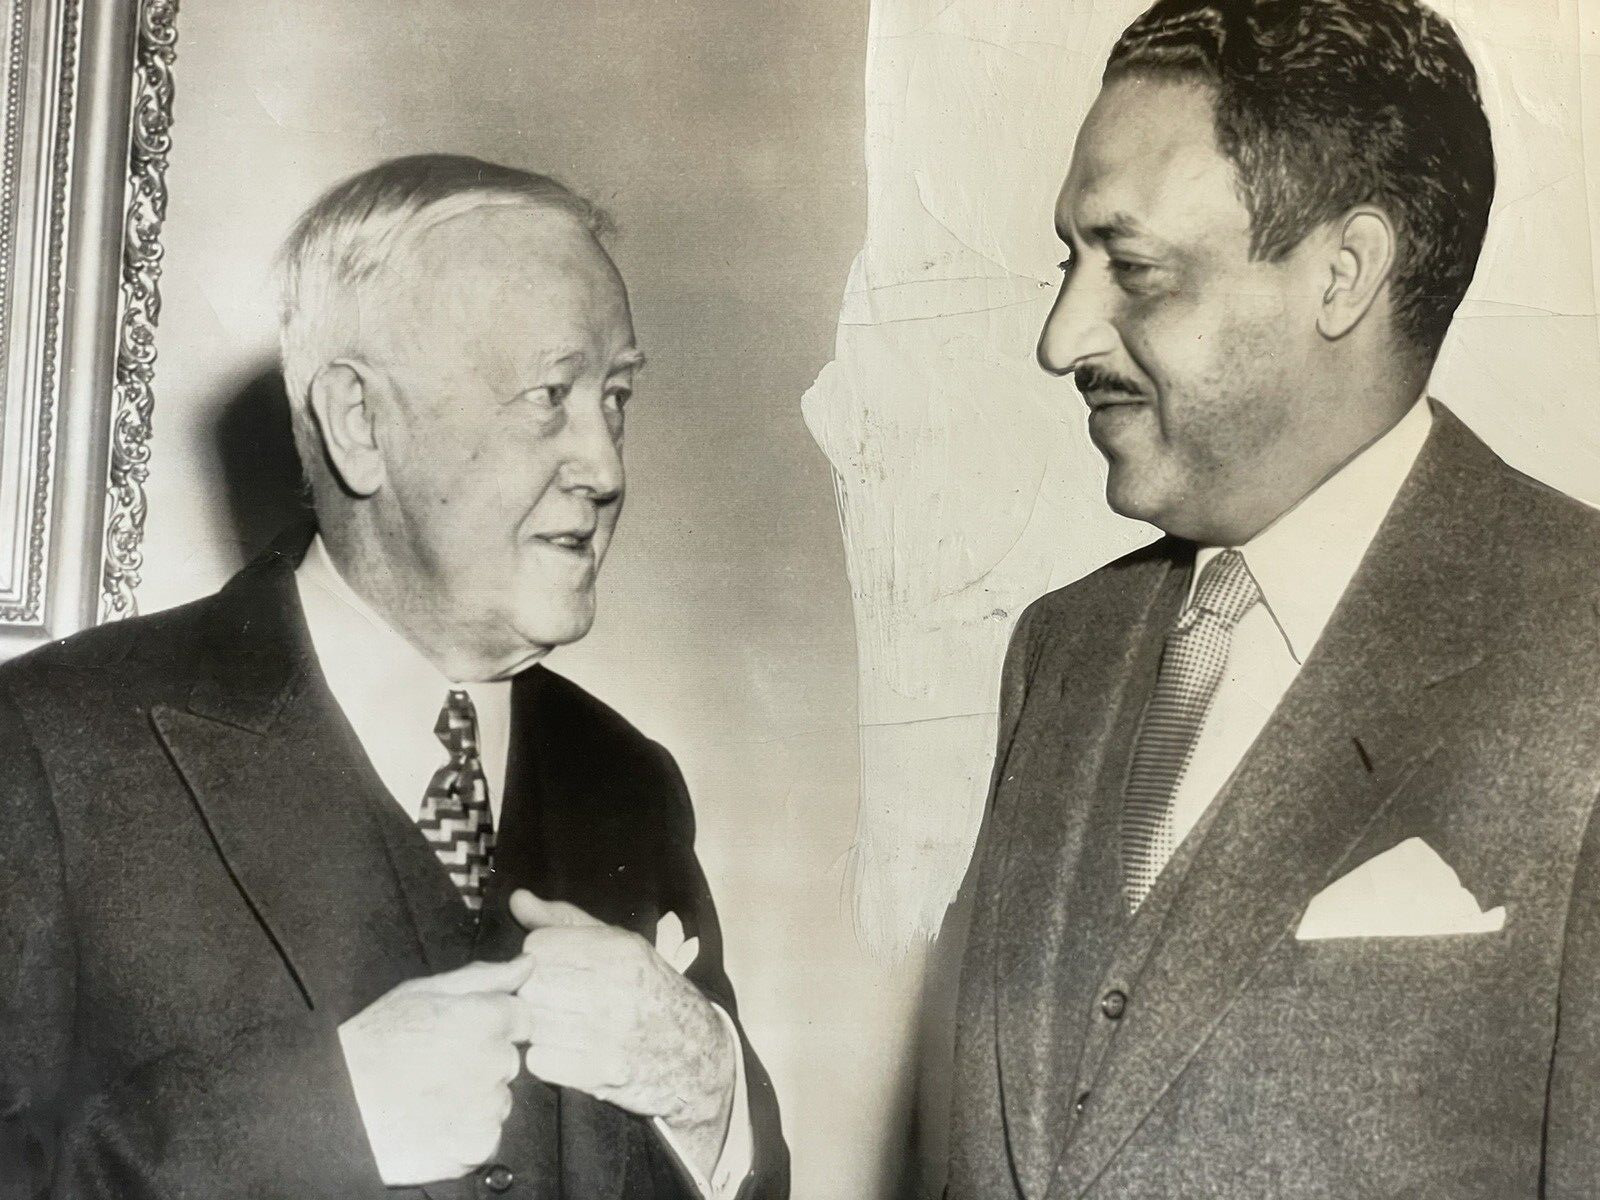 Thurgood Marshall Civil Rights Press Photograph 1955 #historyinpieces